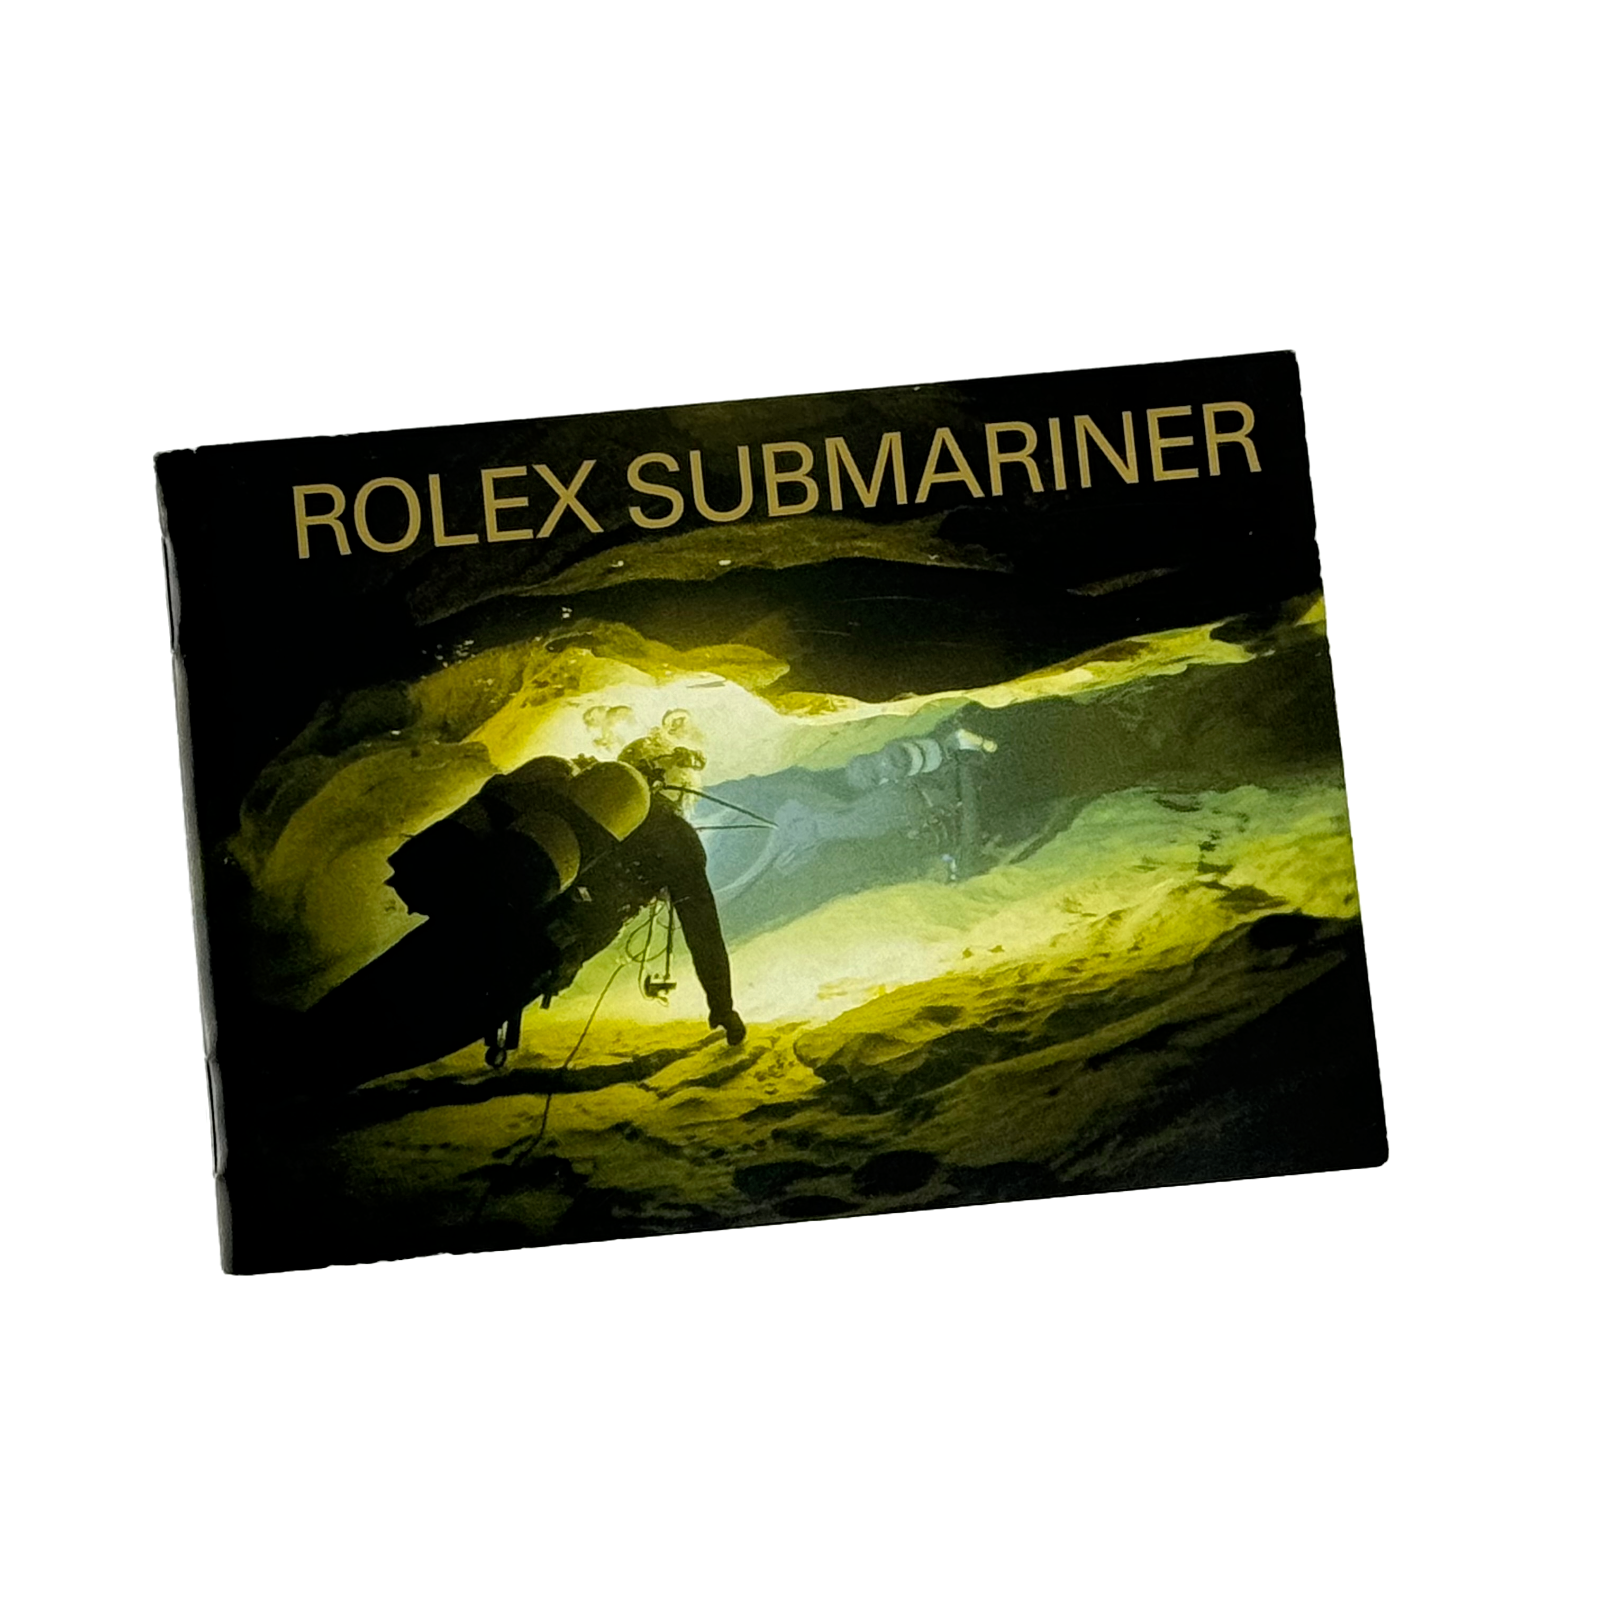  Rolex Submariner Date Booklet Anleitung Beschreibung Anleitung Deutsch German